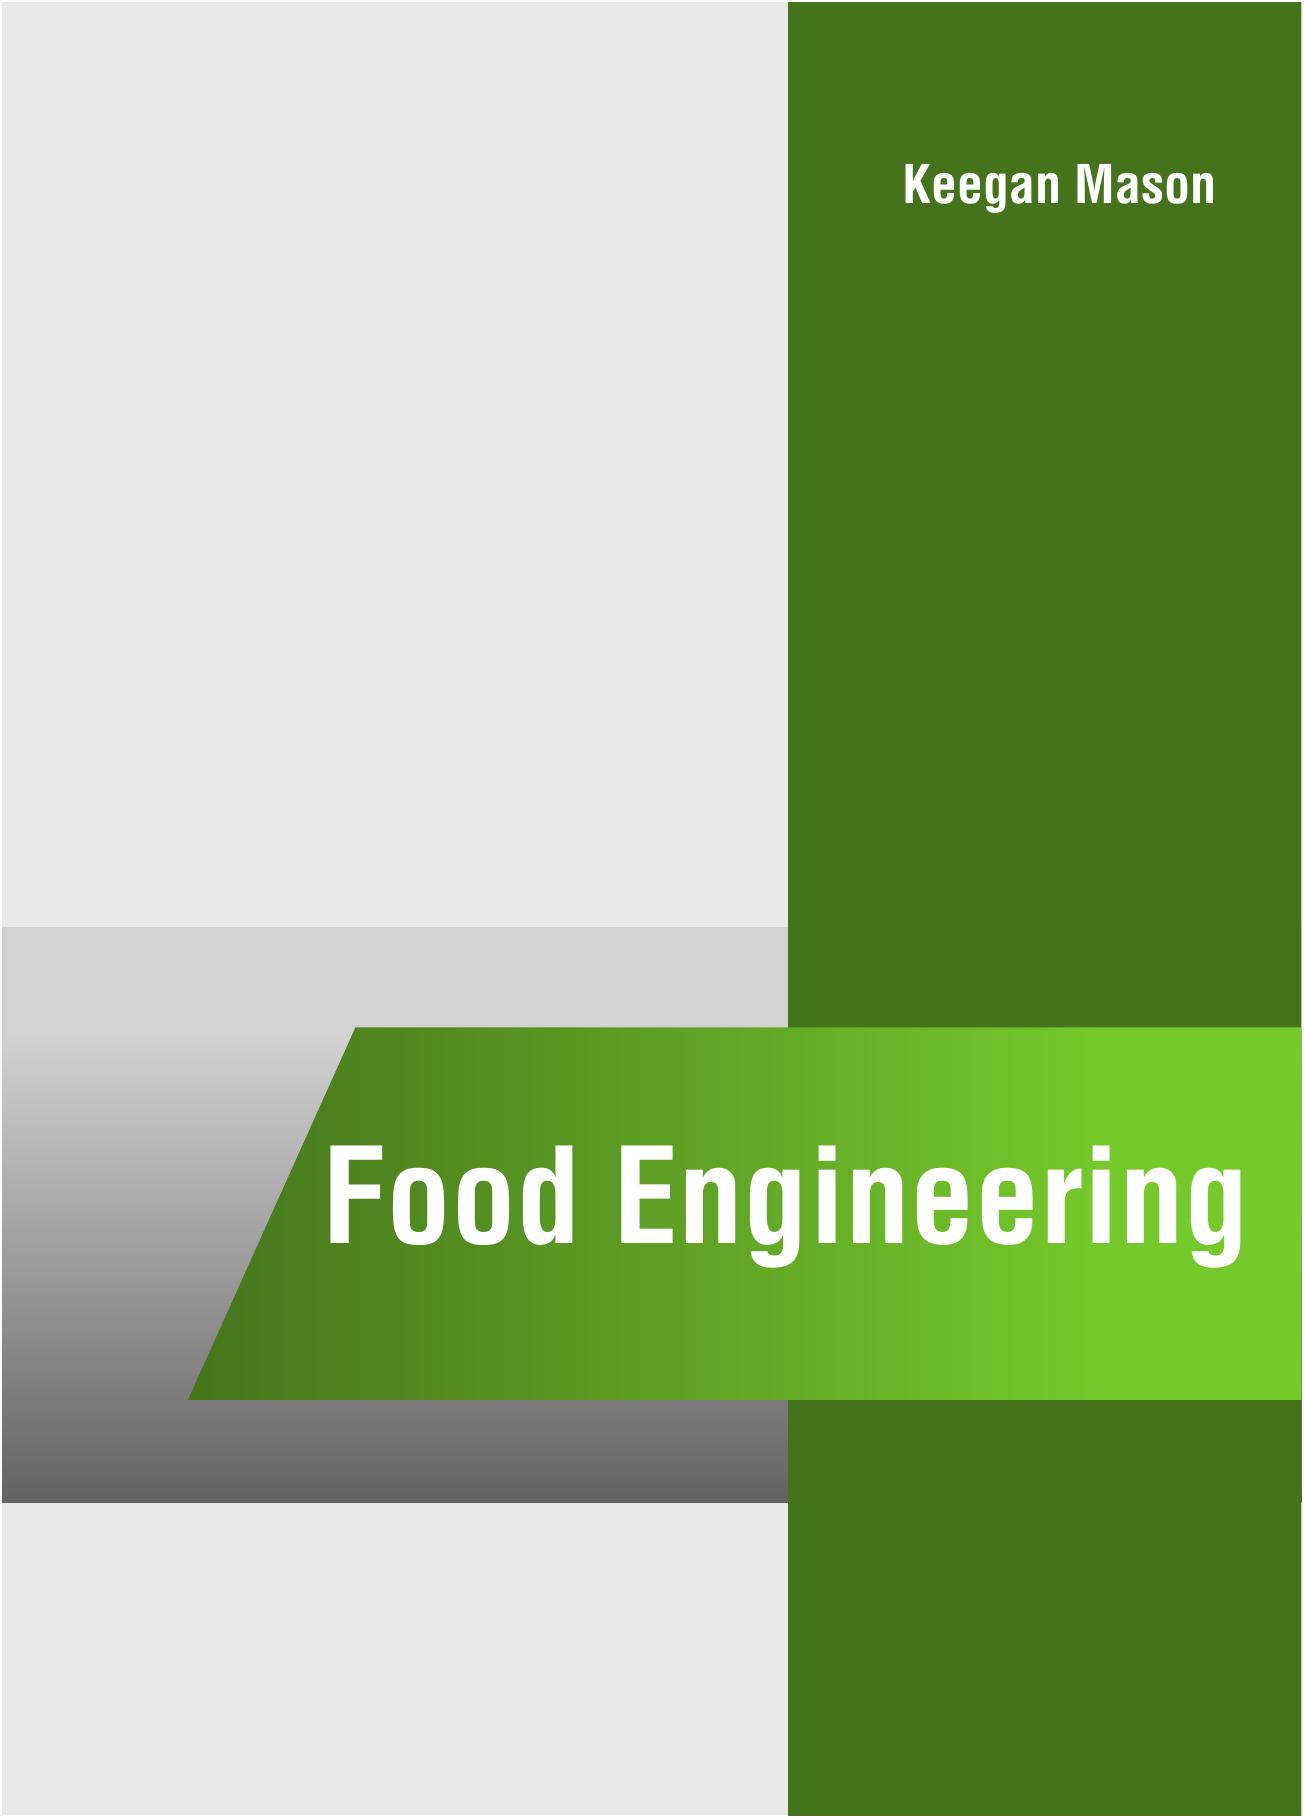 Food Engineering 2017